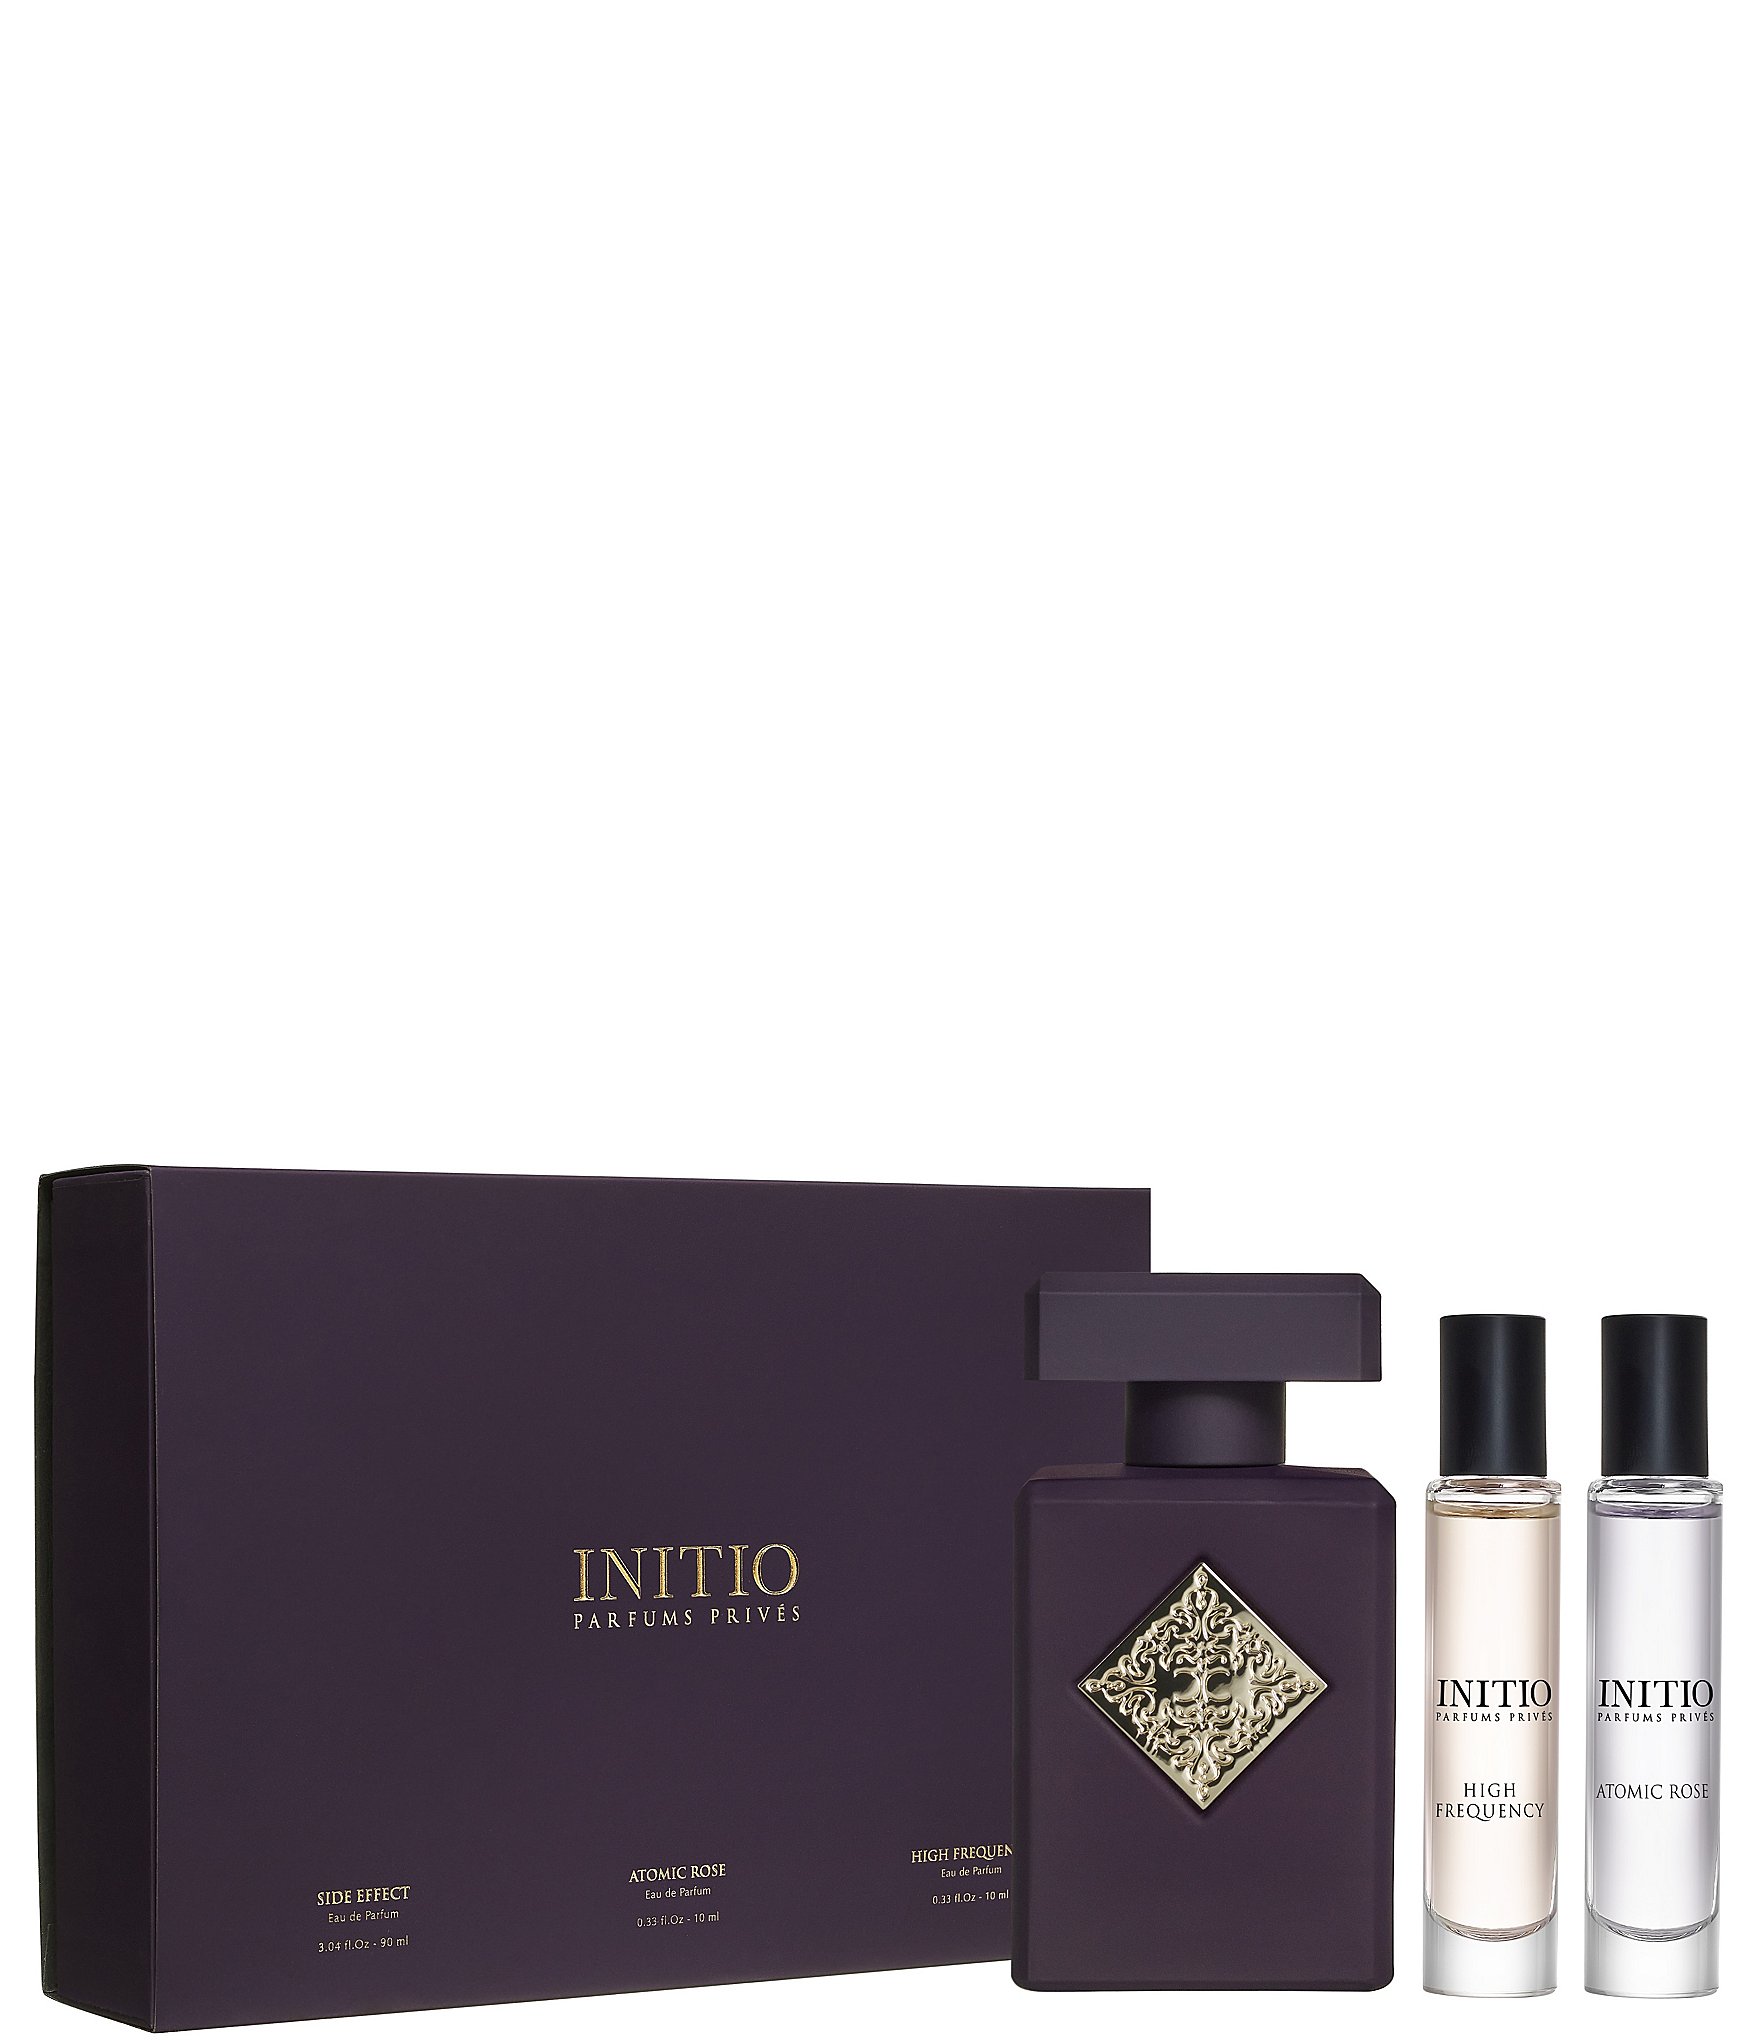 Initio Parfums Prives The Carnal Blends Side Effect 3-Piece Coffret Gift  Set | Dillard\'s